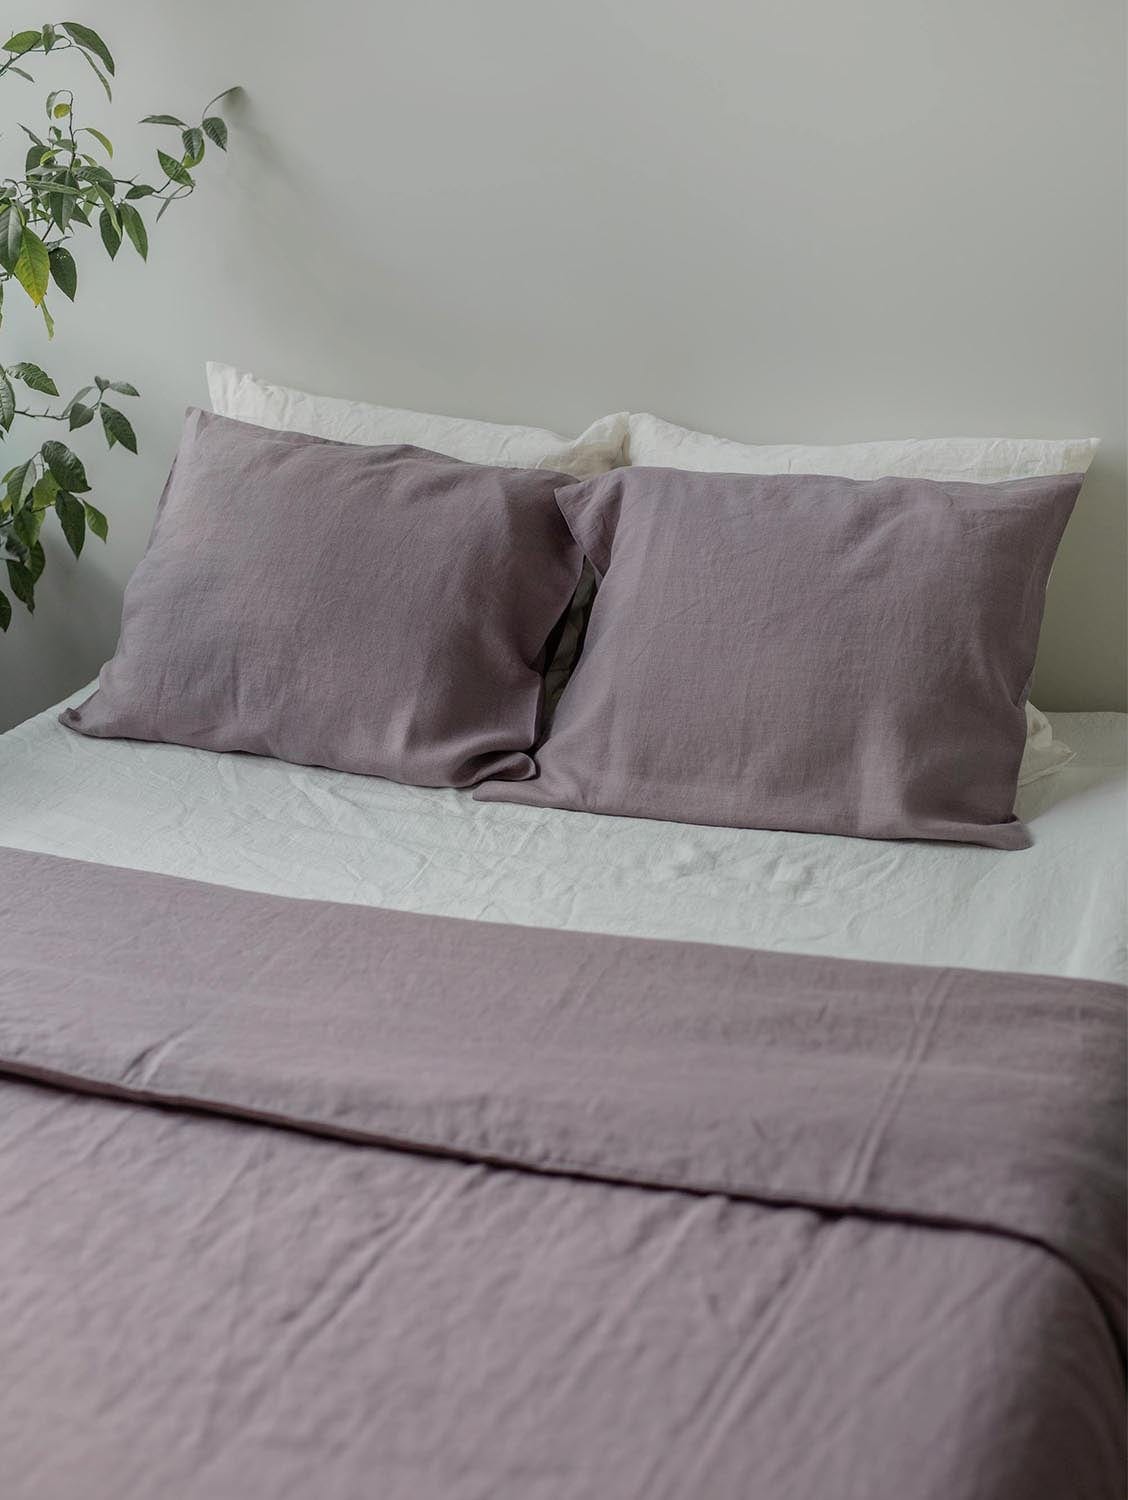 AmourLinen Linen pillowcase in Dusty Lavender Big Deco / Dusty Lavender